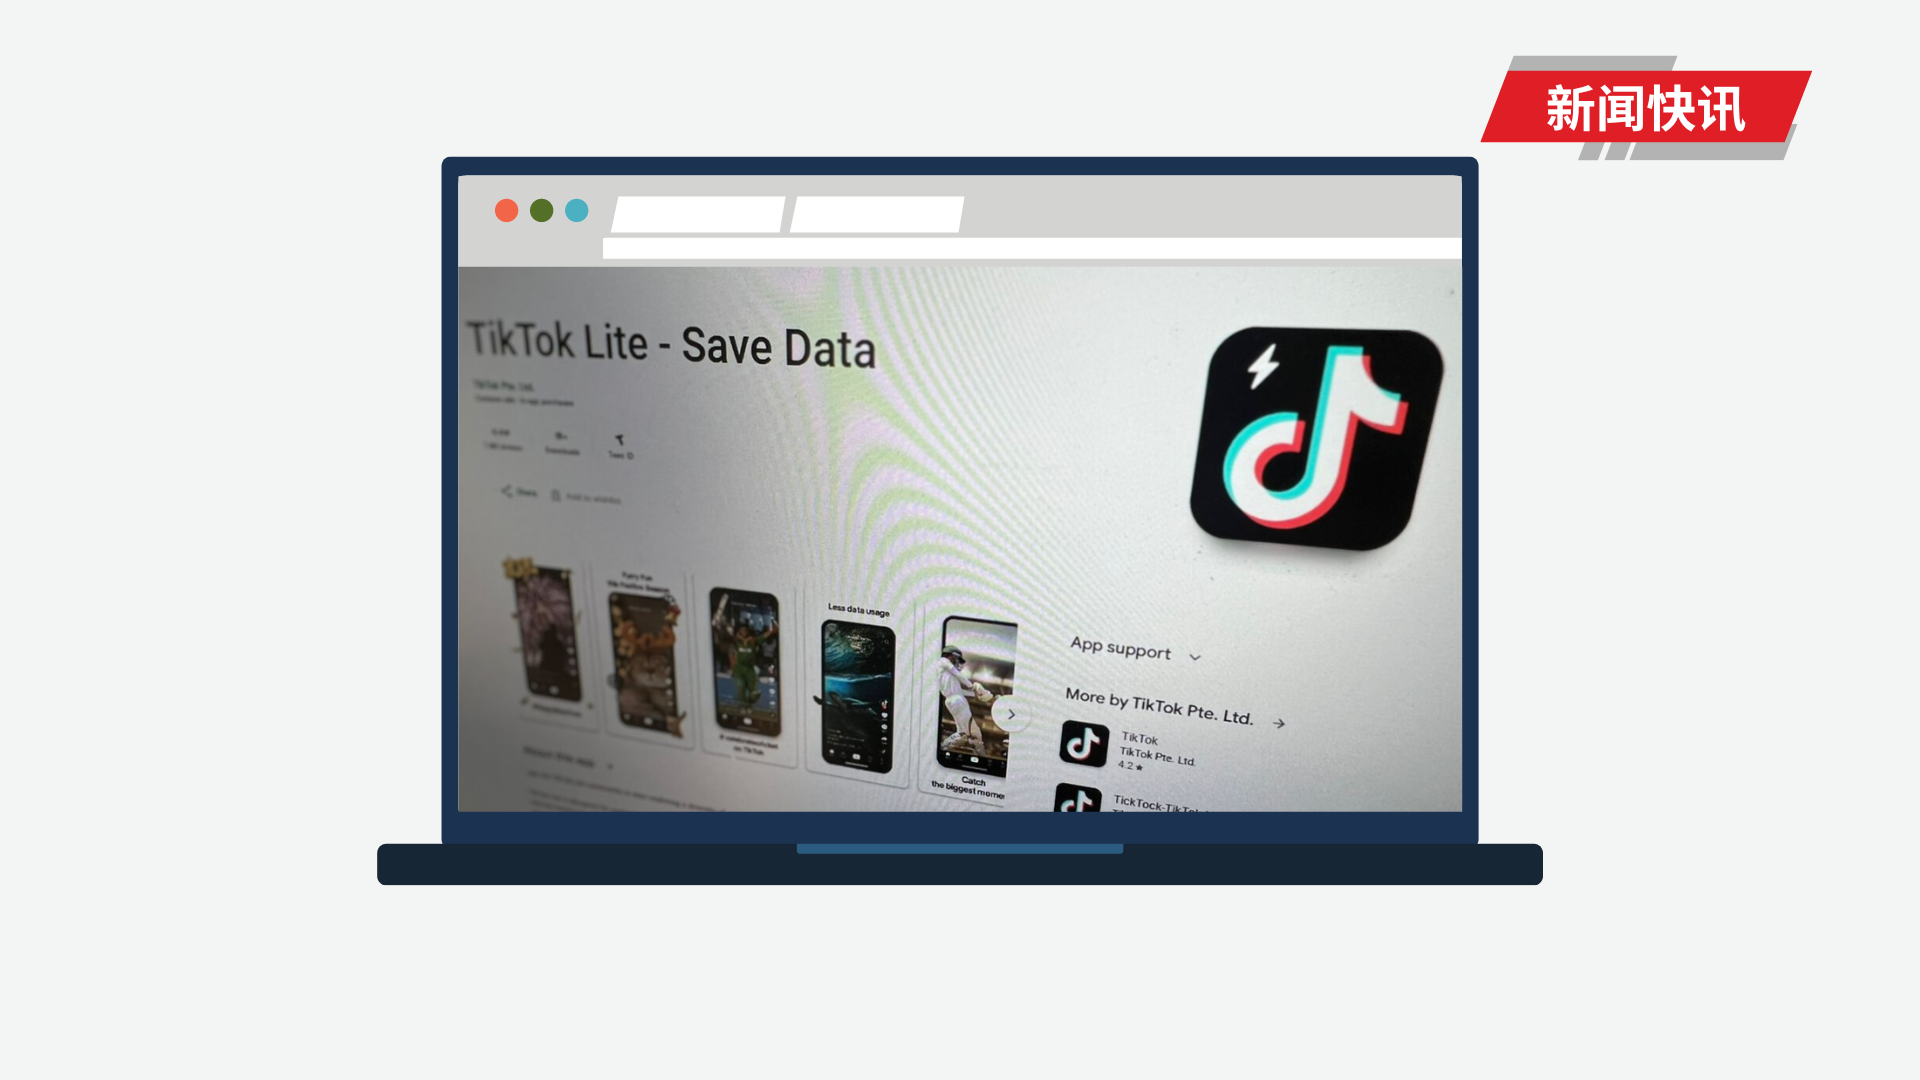 TikTok Lite 新功能引发网络安全担忧：诱导成瘾、侵犯隐私、操纵行为？